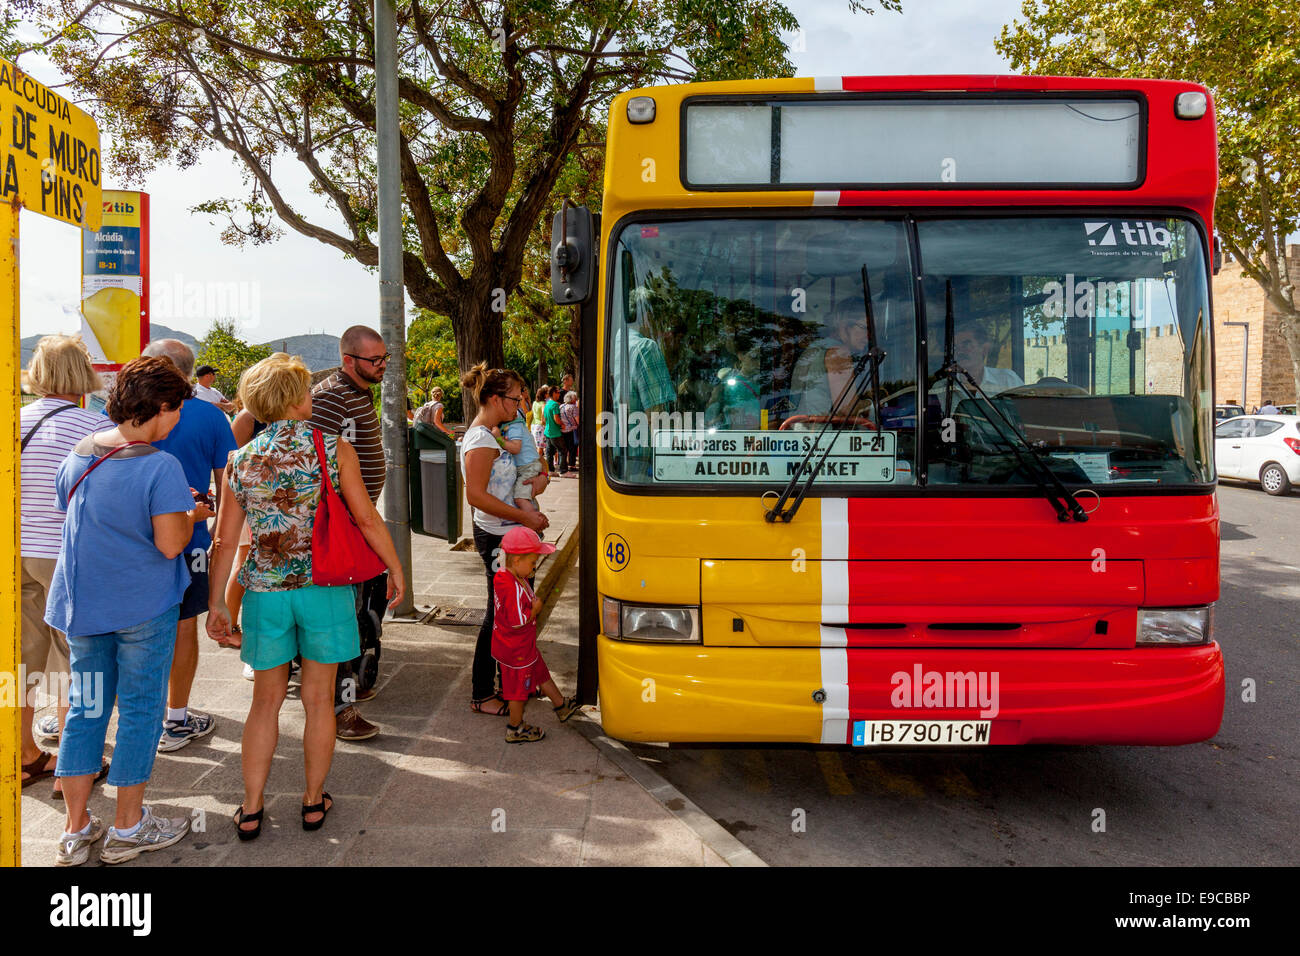 Les transports publics, Alcudia, Mallorca - Espagne Photo Stock - Alamy